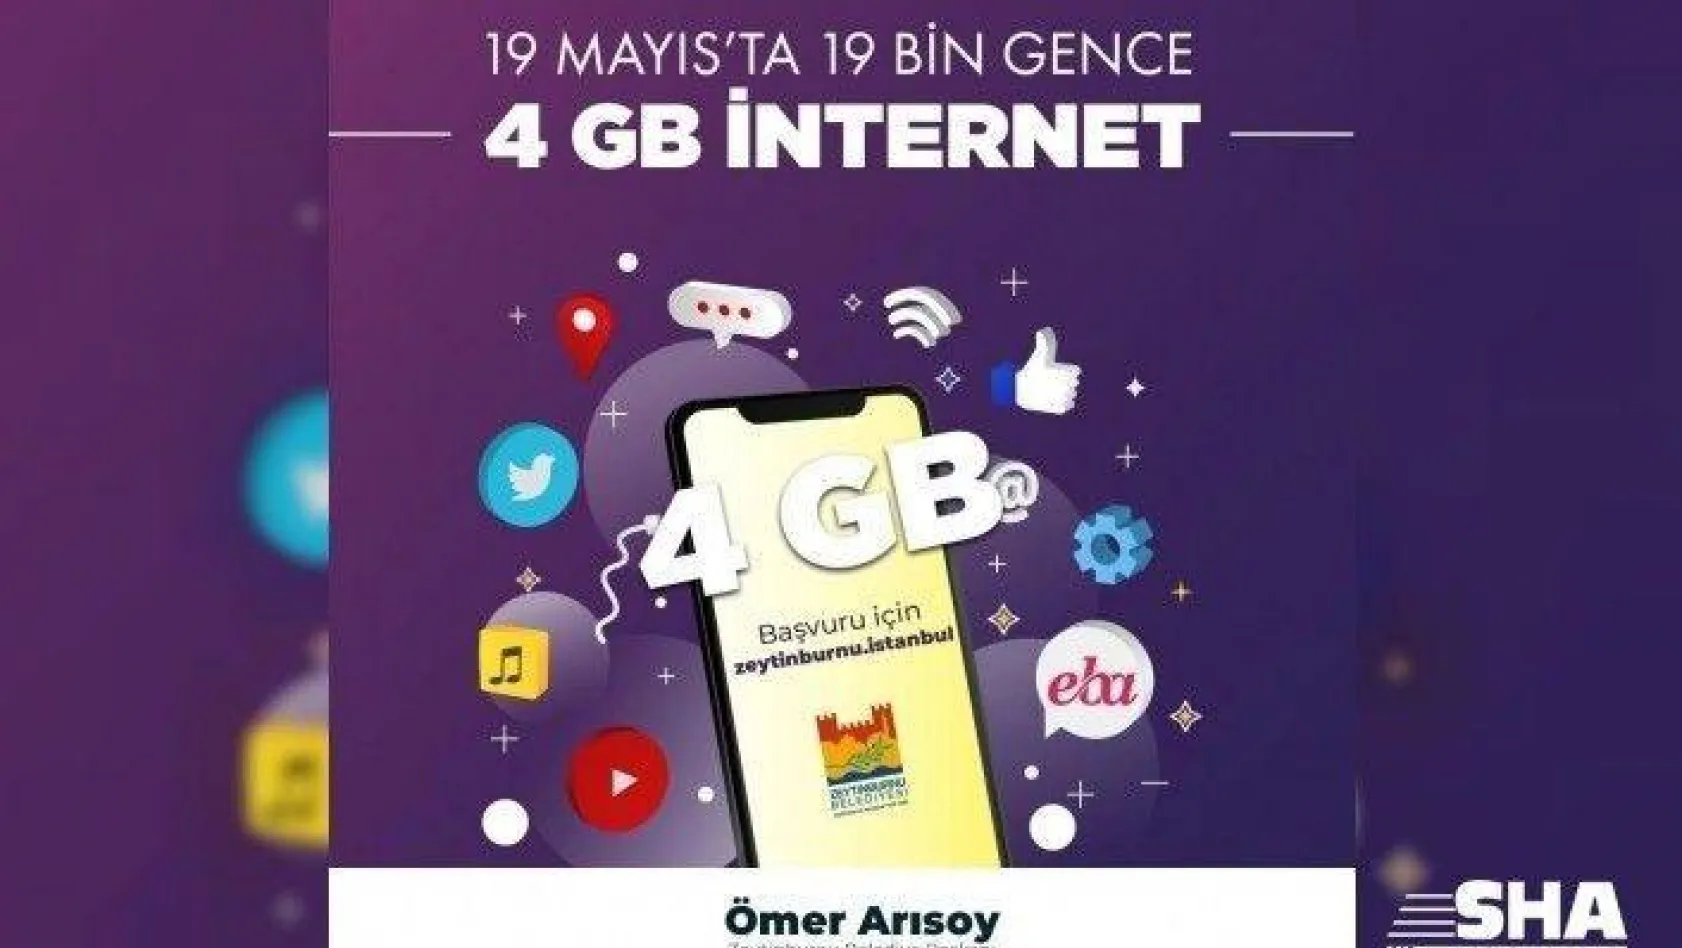 19 Mayıs'ta 19 bin gence ücretsiz internet